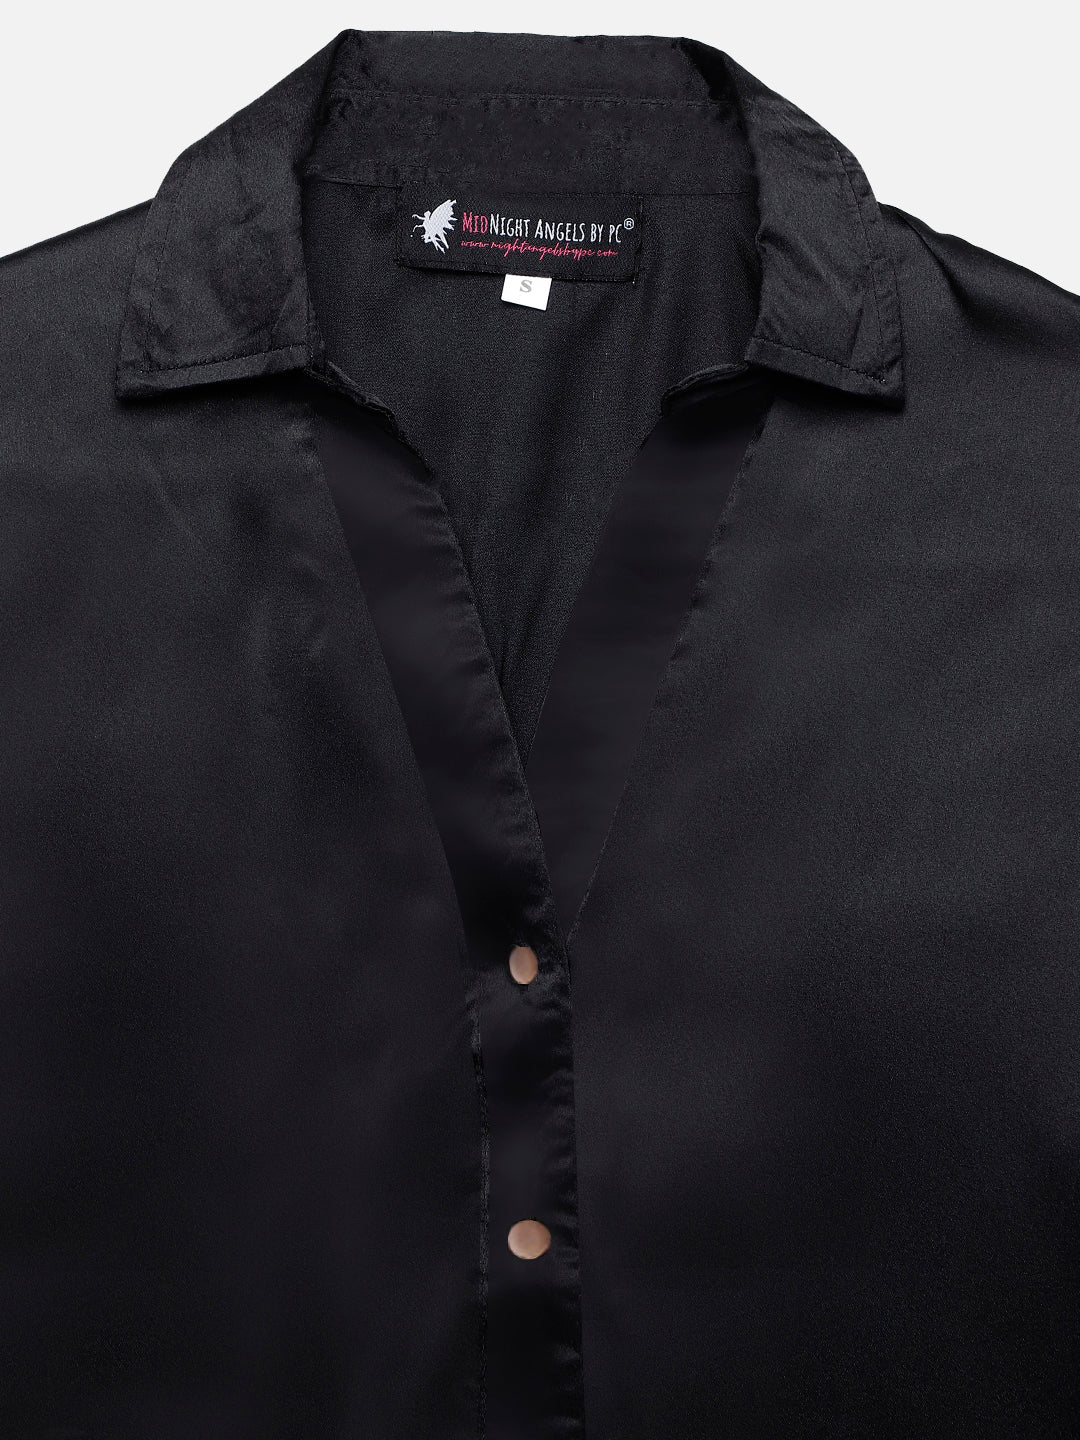 All Black Classic Shirt (Women)